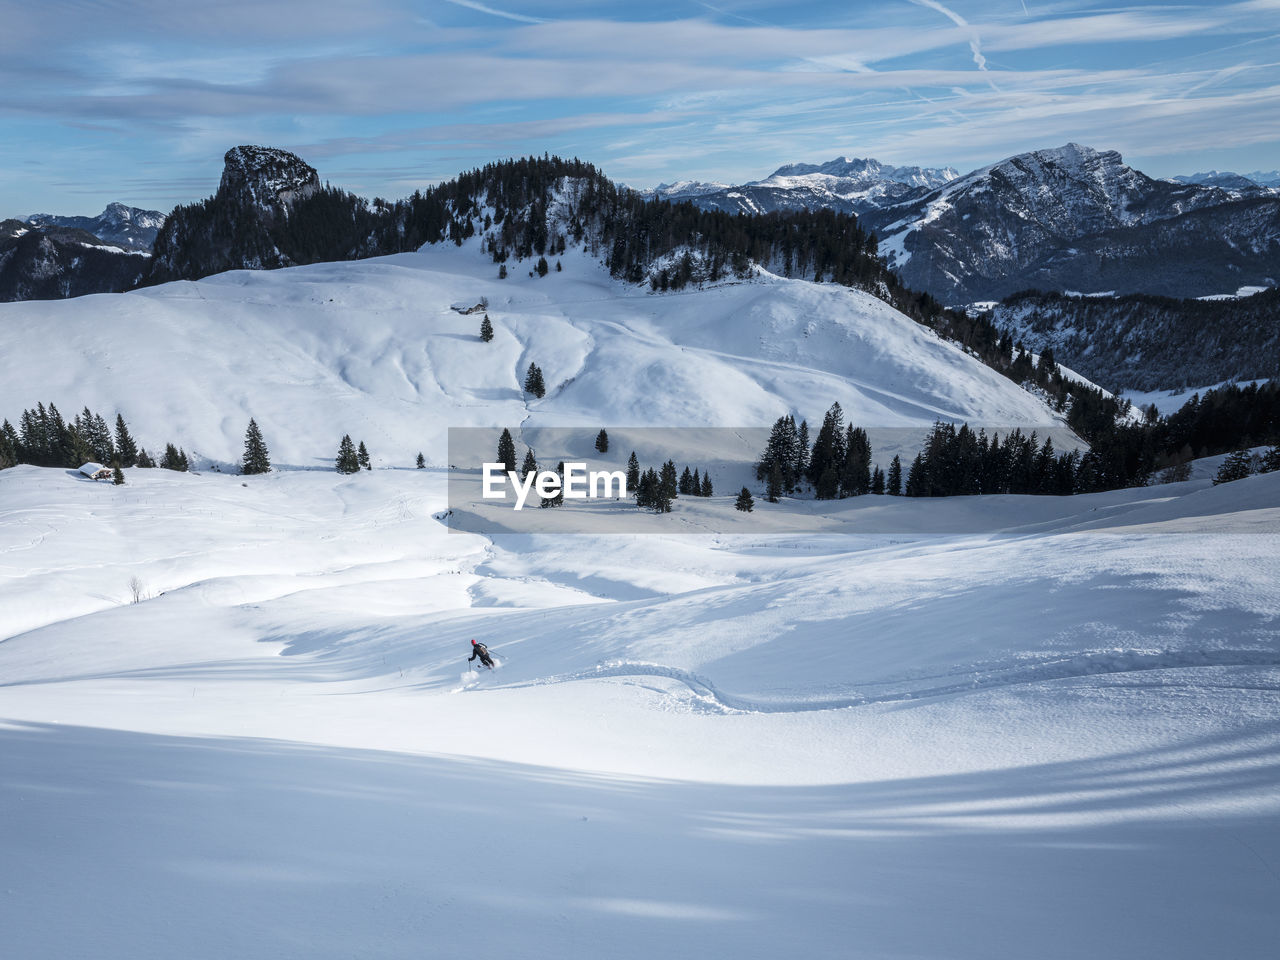 Man skiing on snow covered karkopf, lattengeburge, berchtesgadenerland, germany